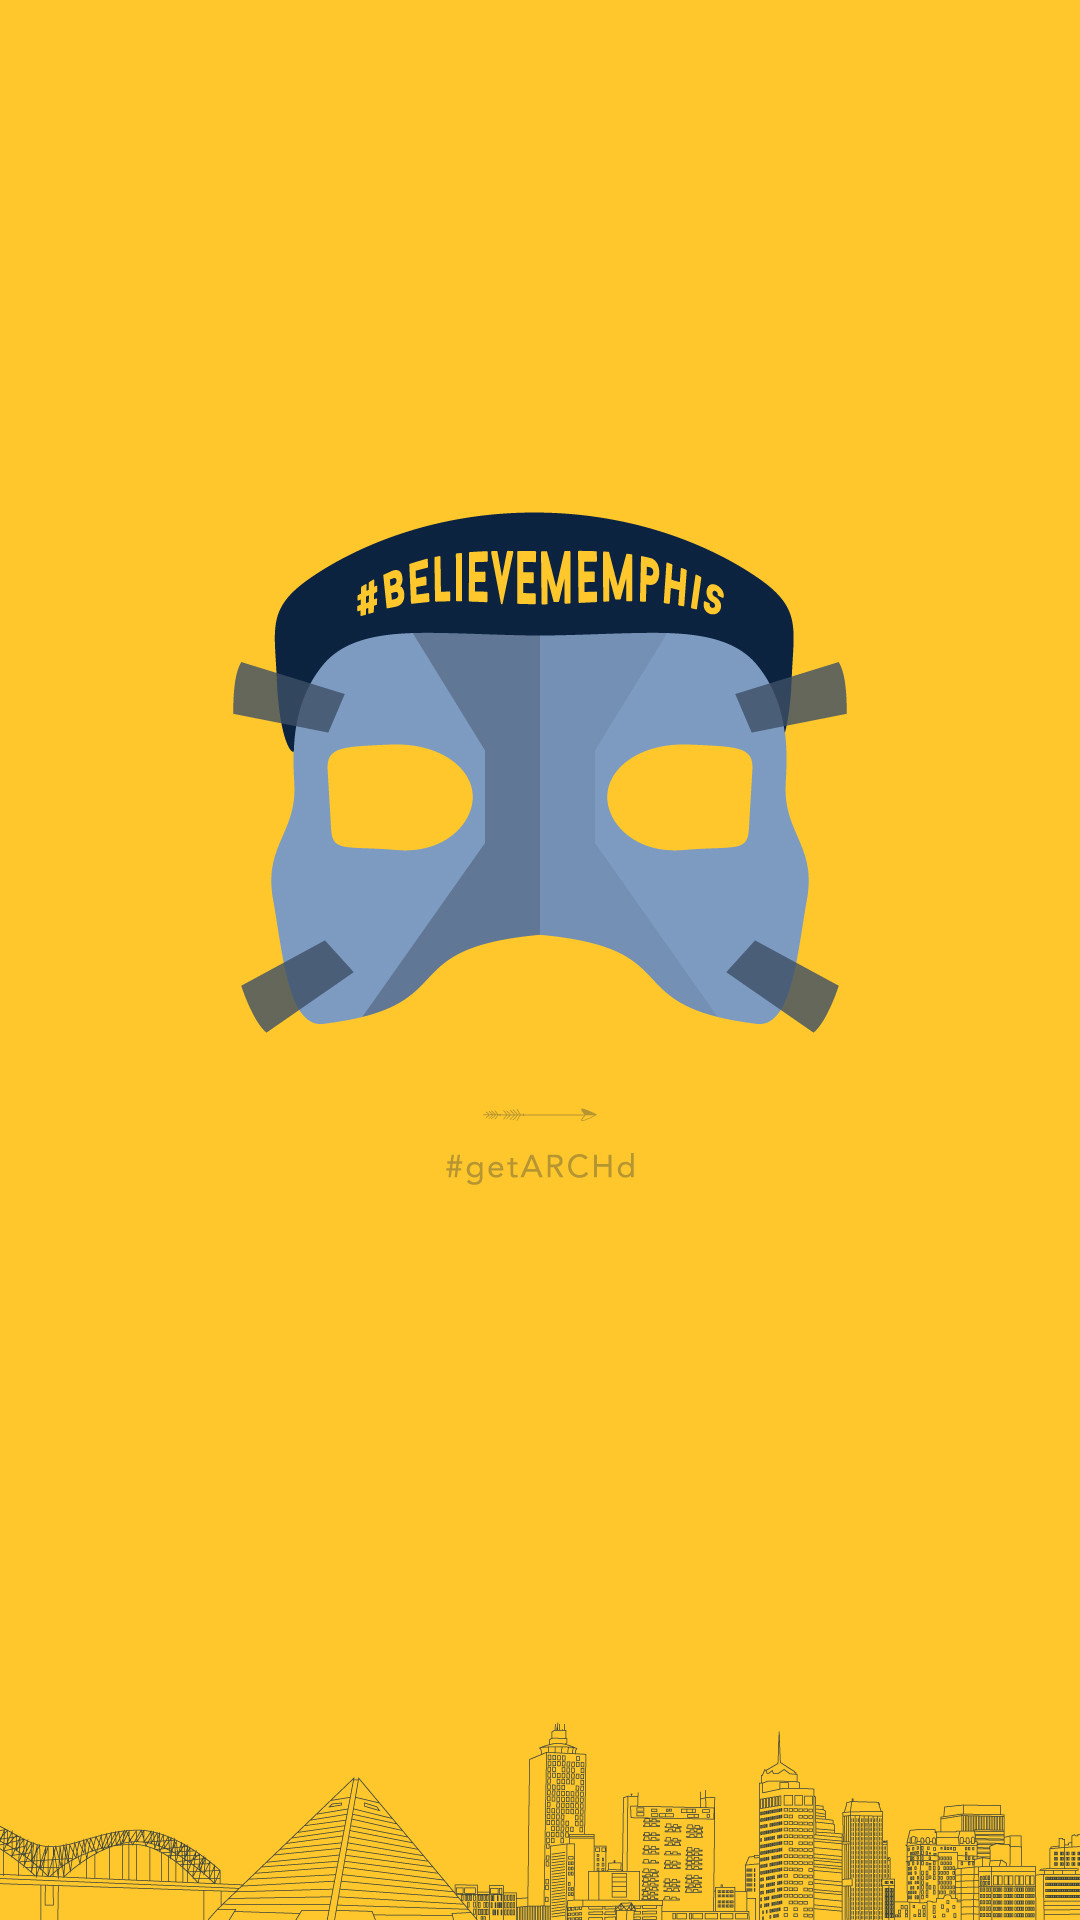 1080x1920 Memphis Grizzlies Mike Conley mask, Believe Memphis, iphone wallpaper  background free graphics download